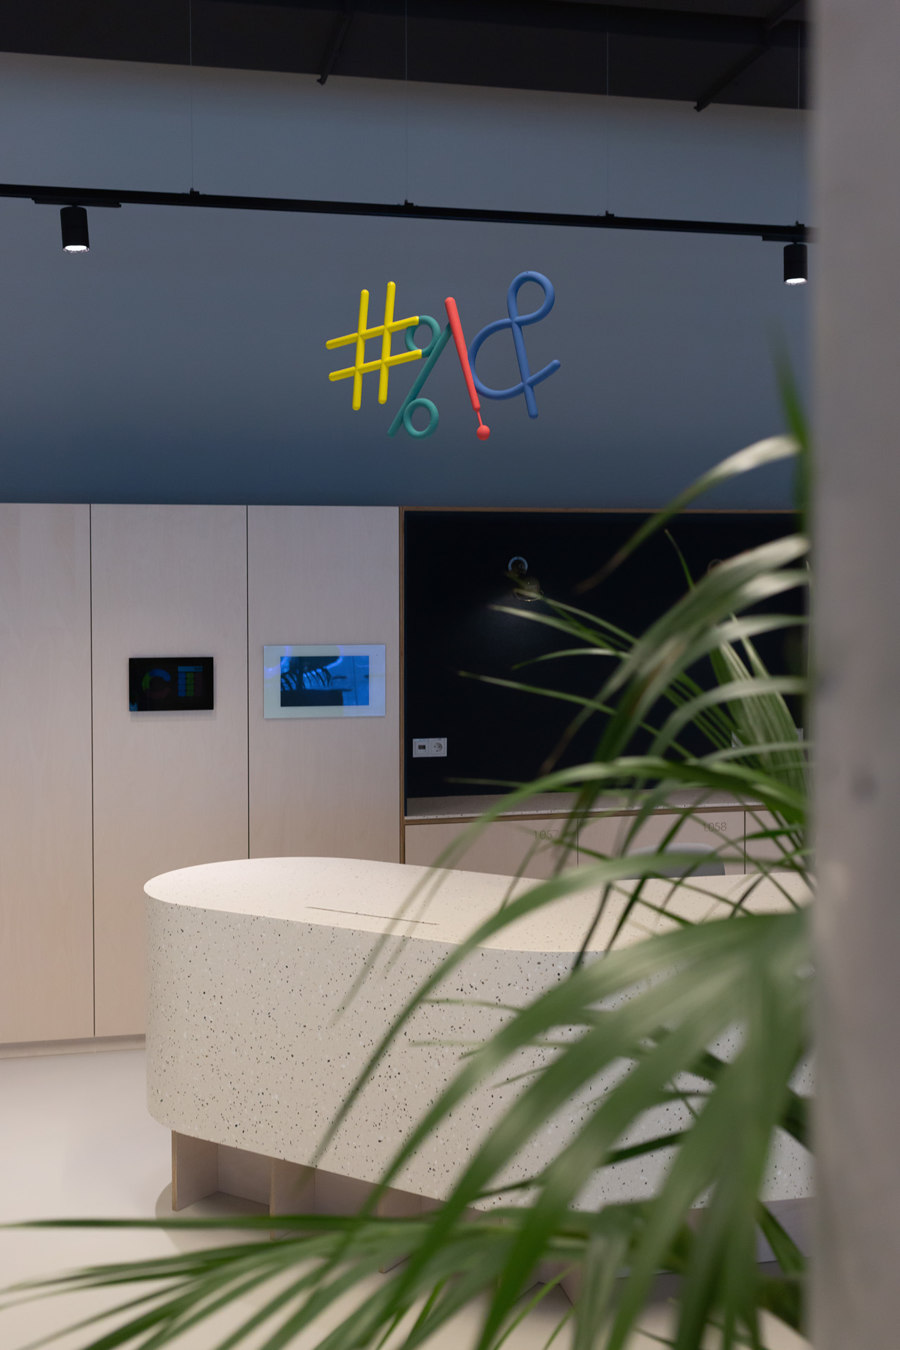 Contentful by toi toi toi creative studio | Office facilities